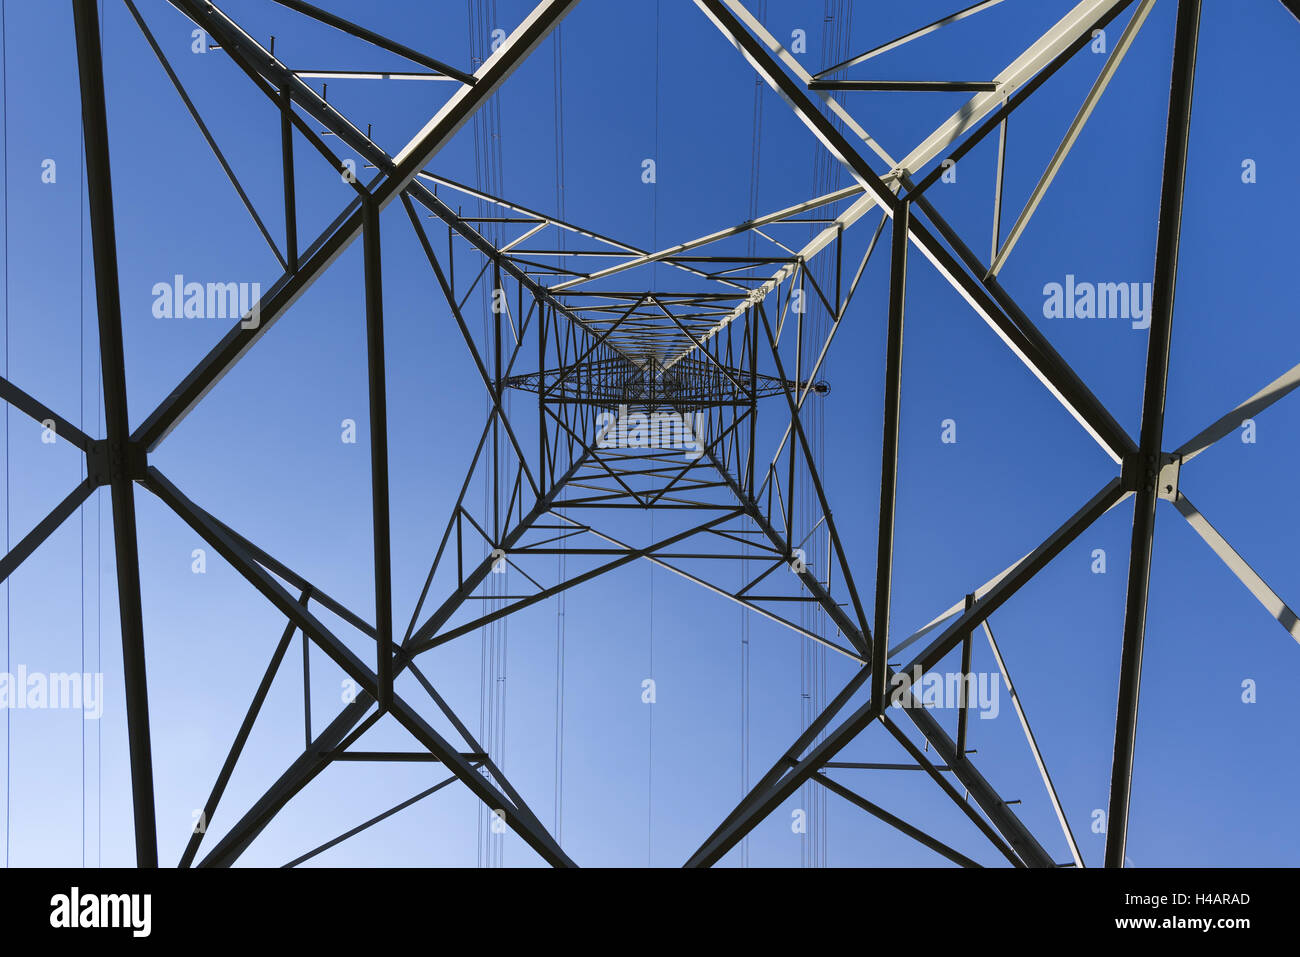 Germany, Hessen, Taunus, Niedernhausen, high-voltage poles and high-tension circuits, Stock Photo